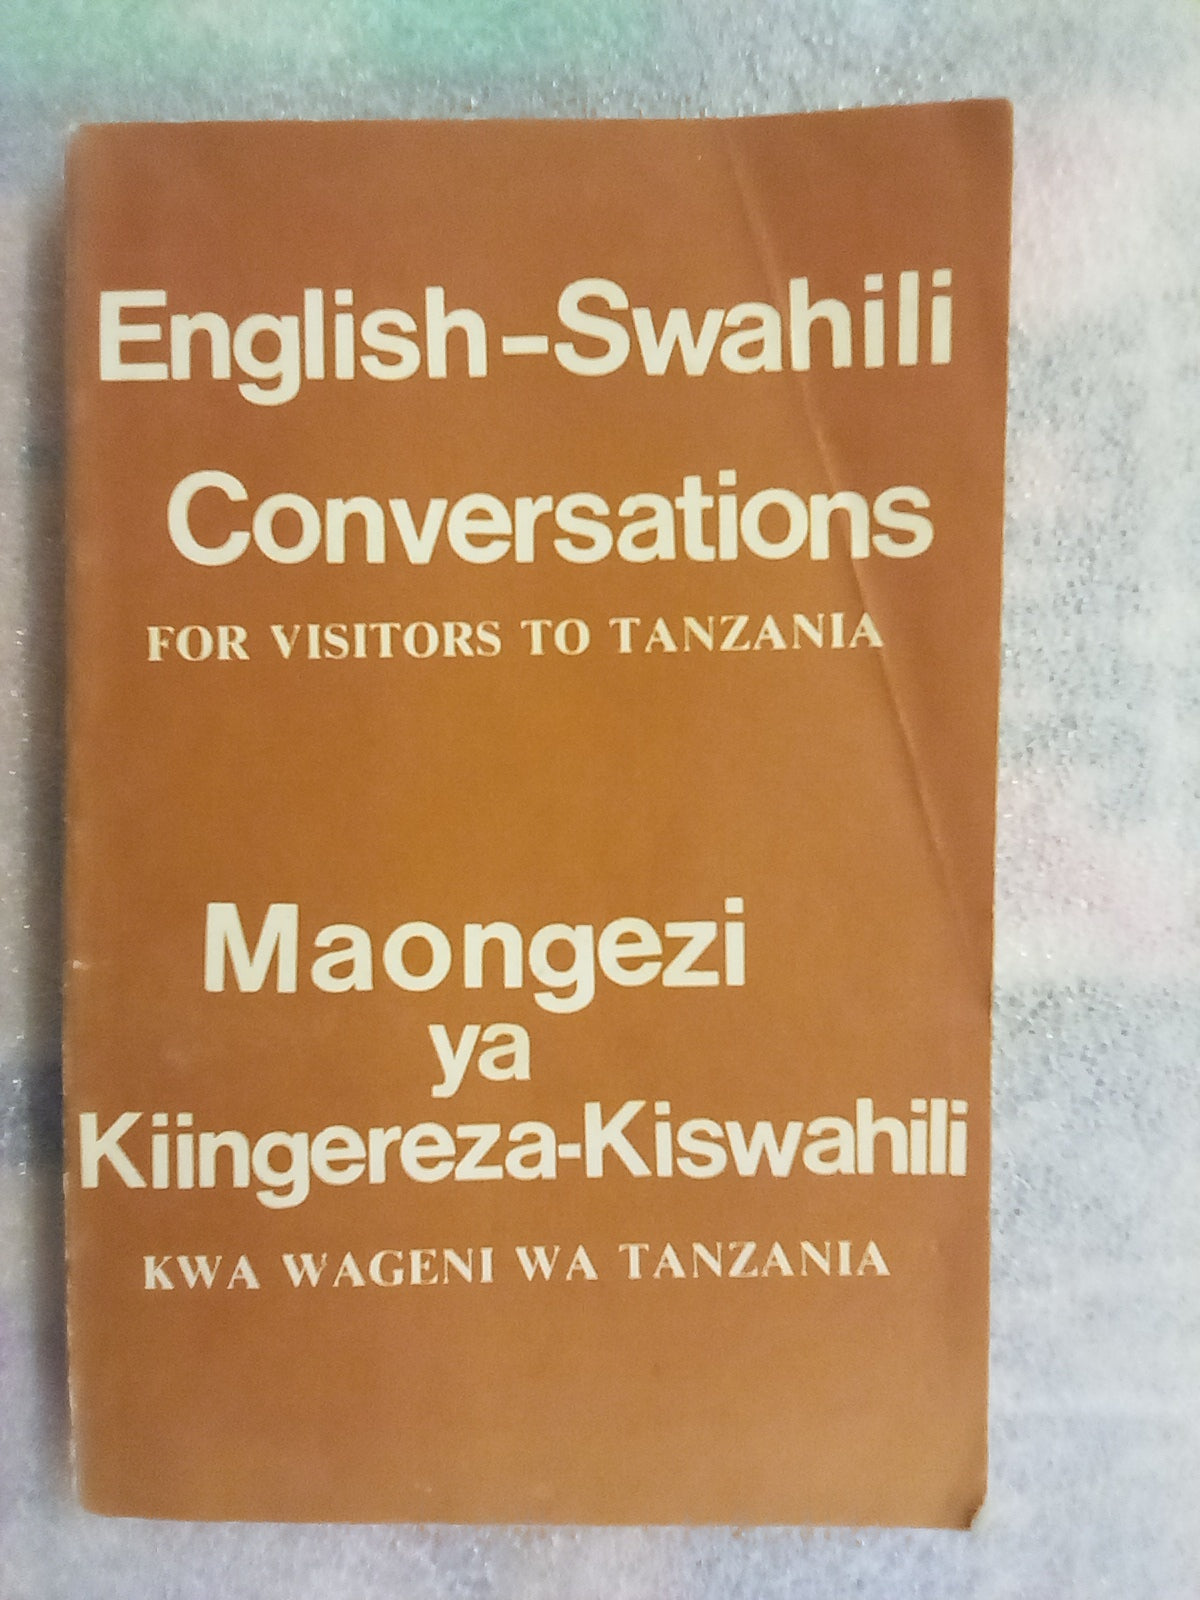 4x Swahili Language Books - Dictionary, Phrase book, & Grammar